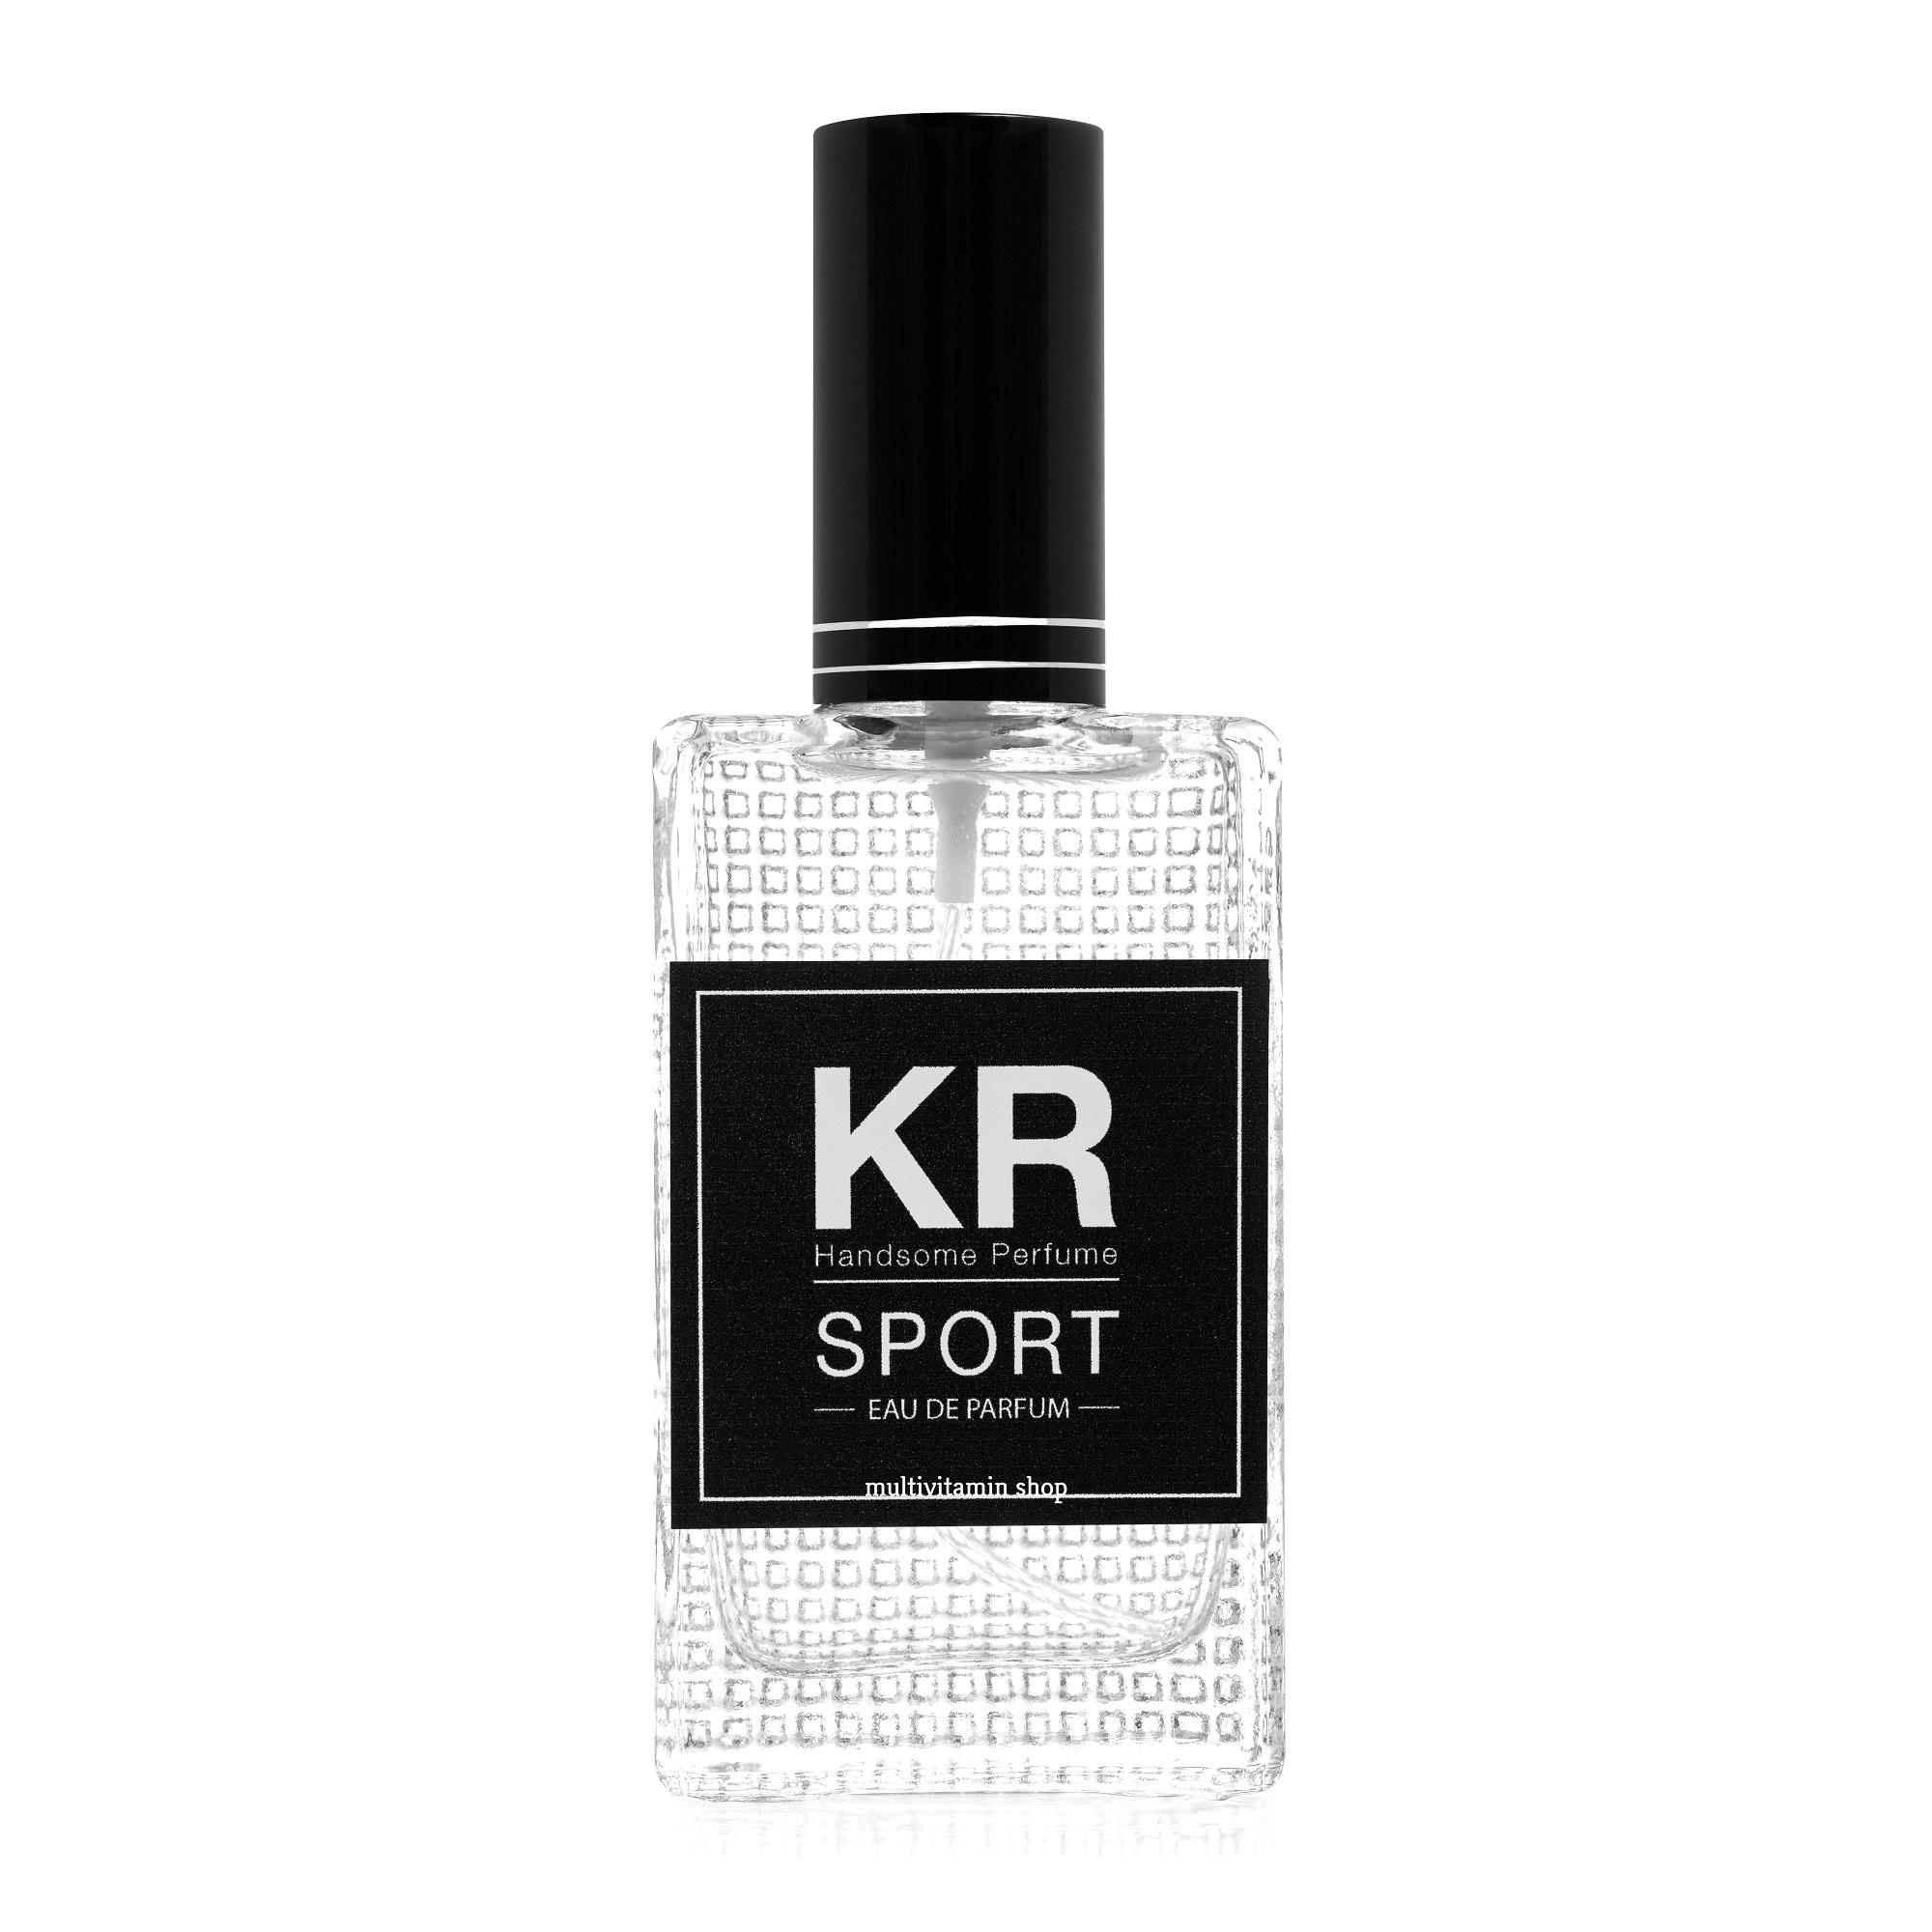 KR Handsome Perfume น้ำหอม น้ำหอมผู้ชาย น้ำหอมสำหรับผู้ชาย น้ำหอมผู้หญิง น้ำหอมสำหรับผู้หญิง ติดทนนาน กลิ่นสปอร์ต cps แชป กลิ่นจะออกนุ่มๆ หอมเย็นสดชื่น ไม่ฉุน หอมนาน 8-10ชั่วโมง ขนาด 50 ml. 2 ขวด